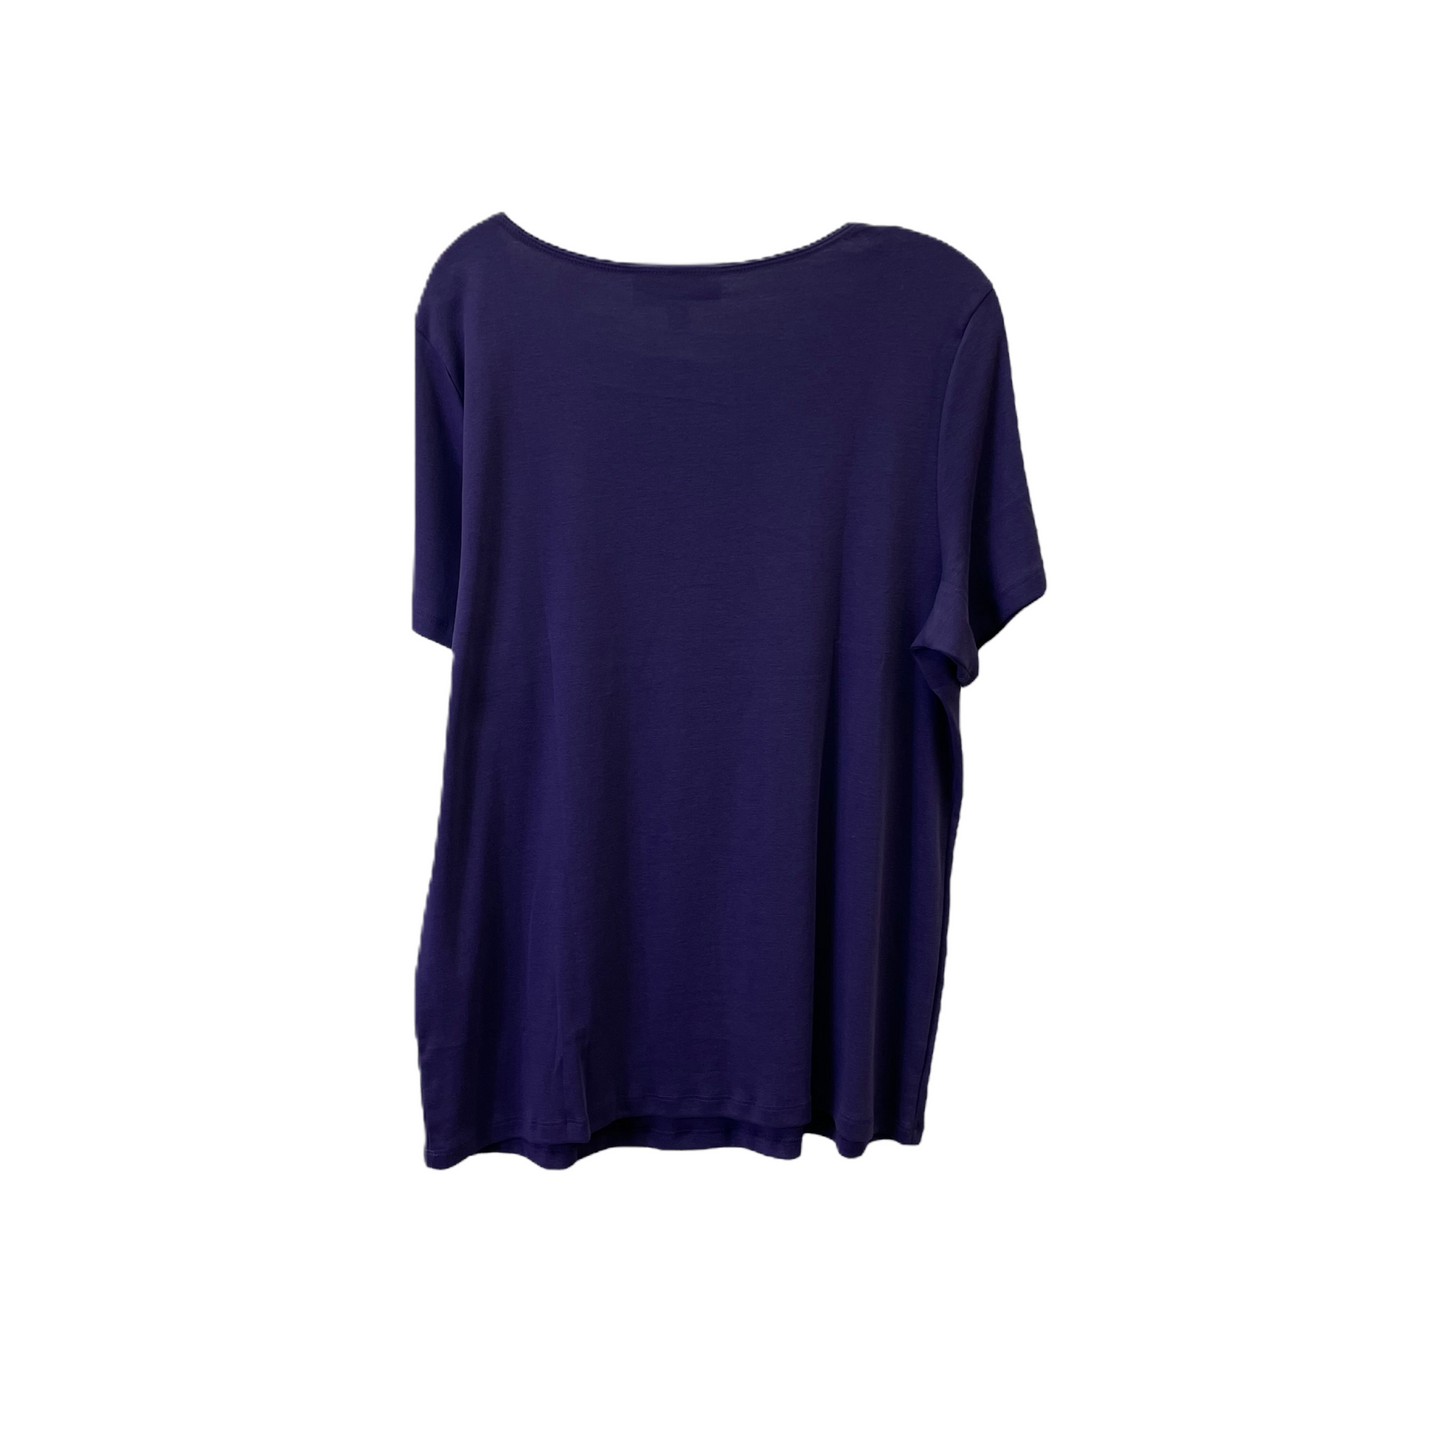 Purple Top Short Sleeve Basic By Karen Scott, Size: 1x